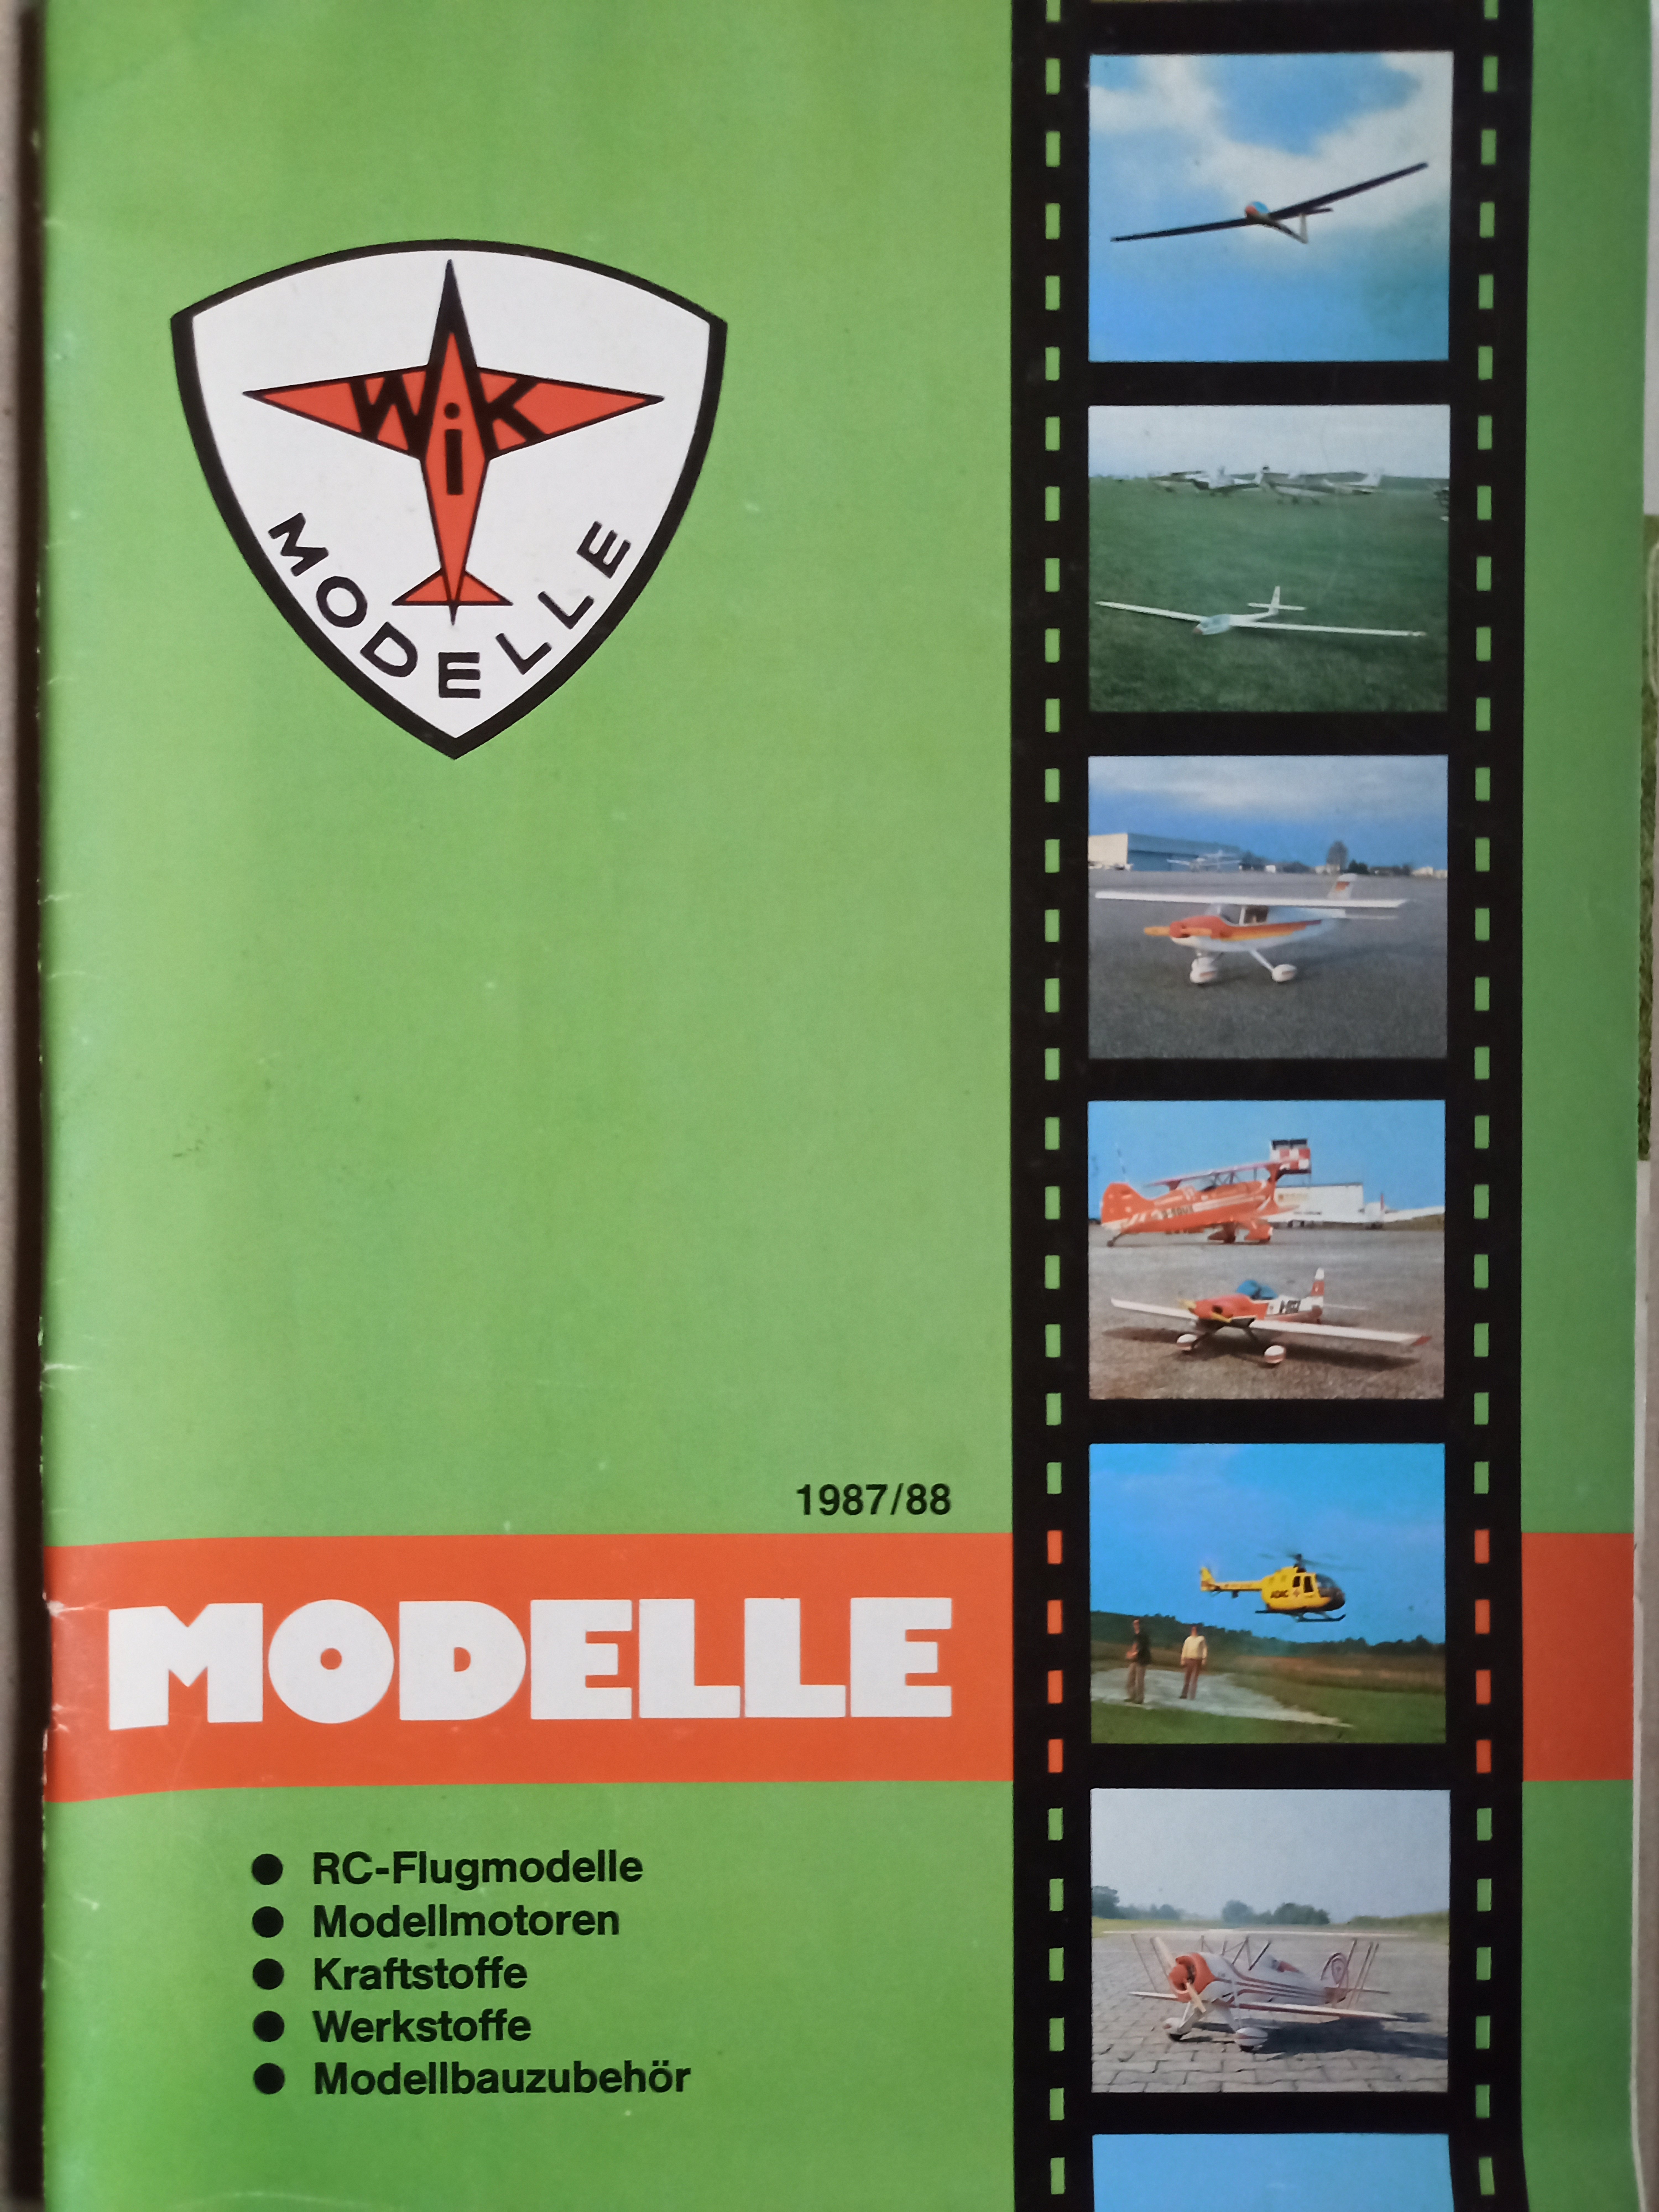 WIK Katalog 1987/88 (Deutsches Segelflugmuseum mit Modellflug CC BY-NC-SA)